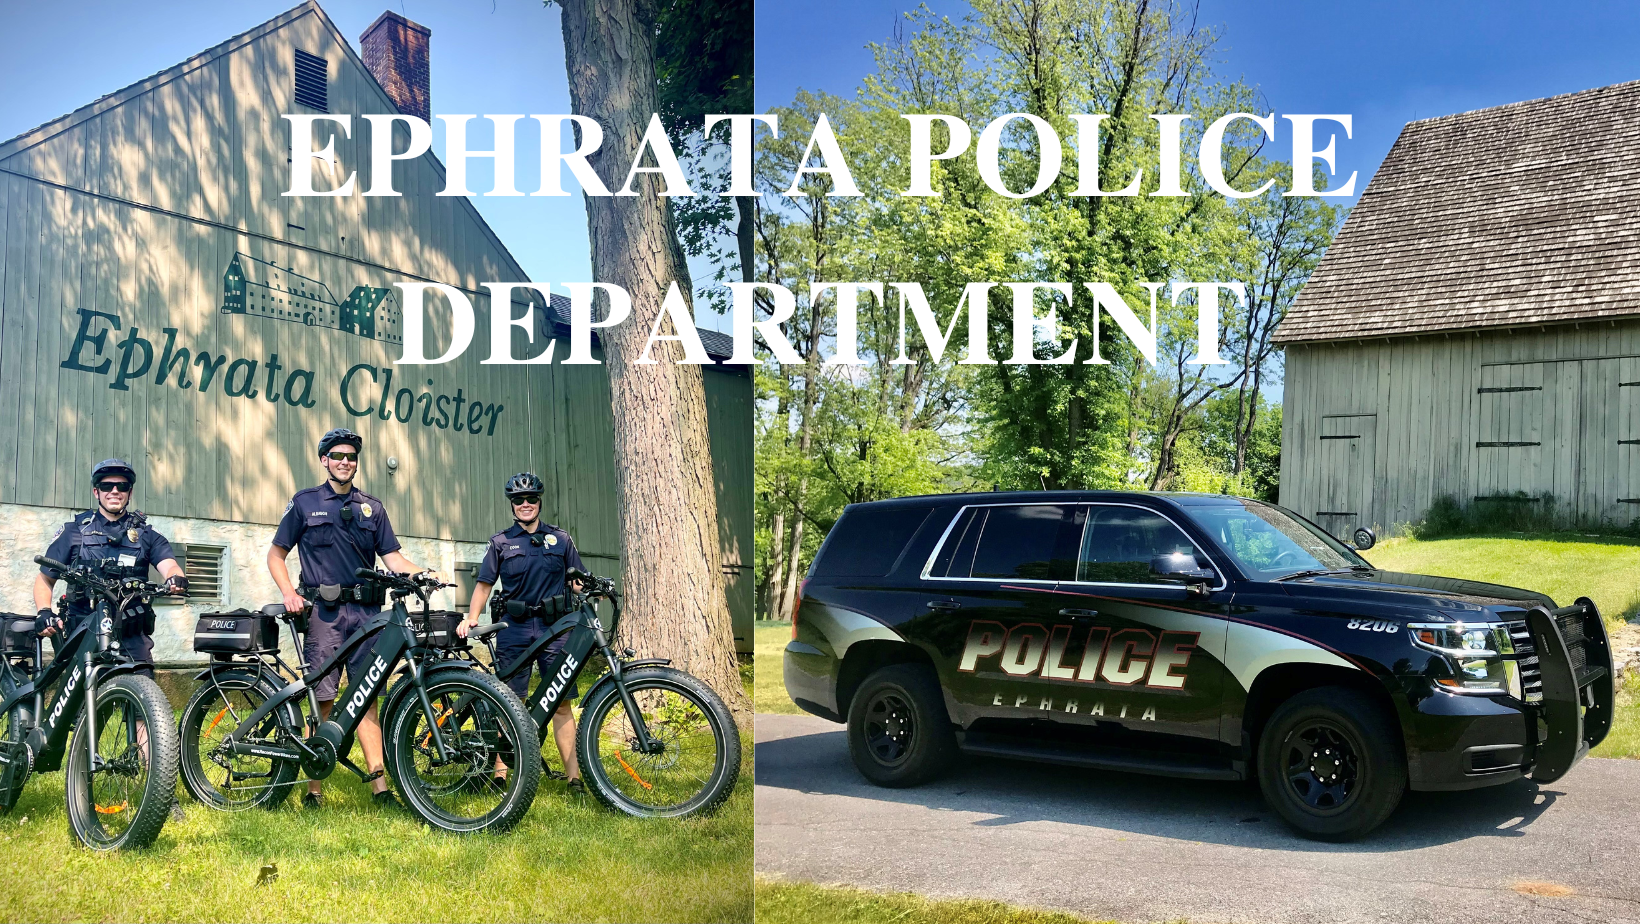 Ephrata Police Department, PA Public Safety Jobs